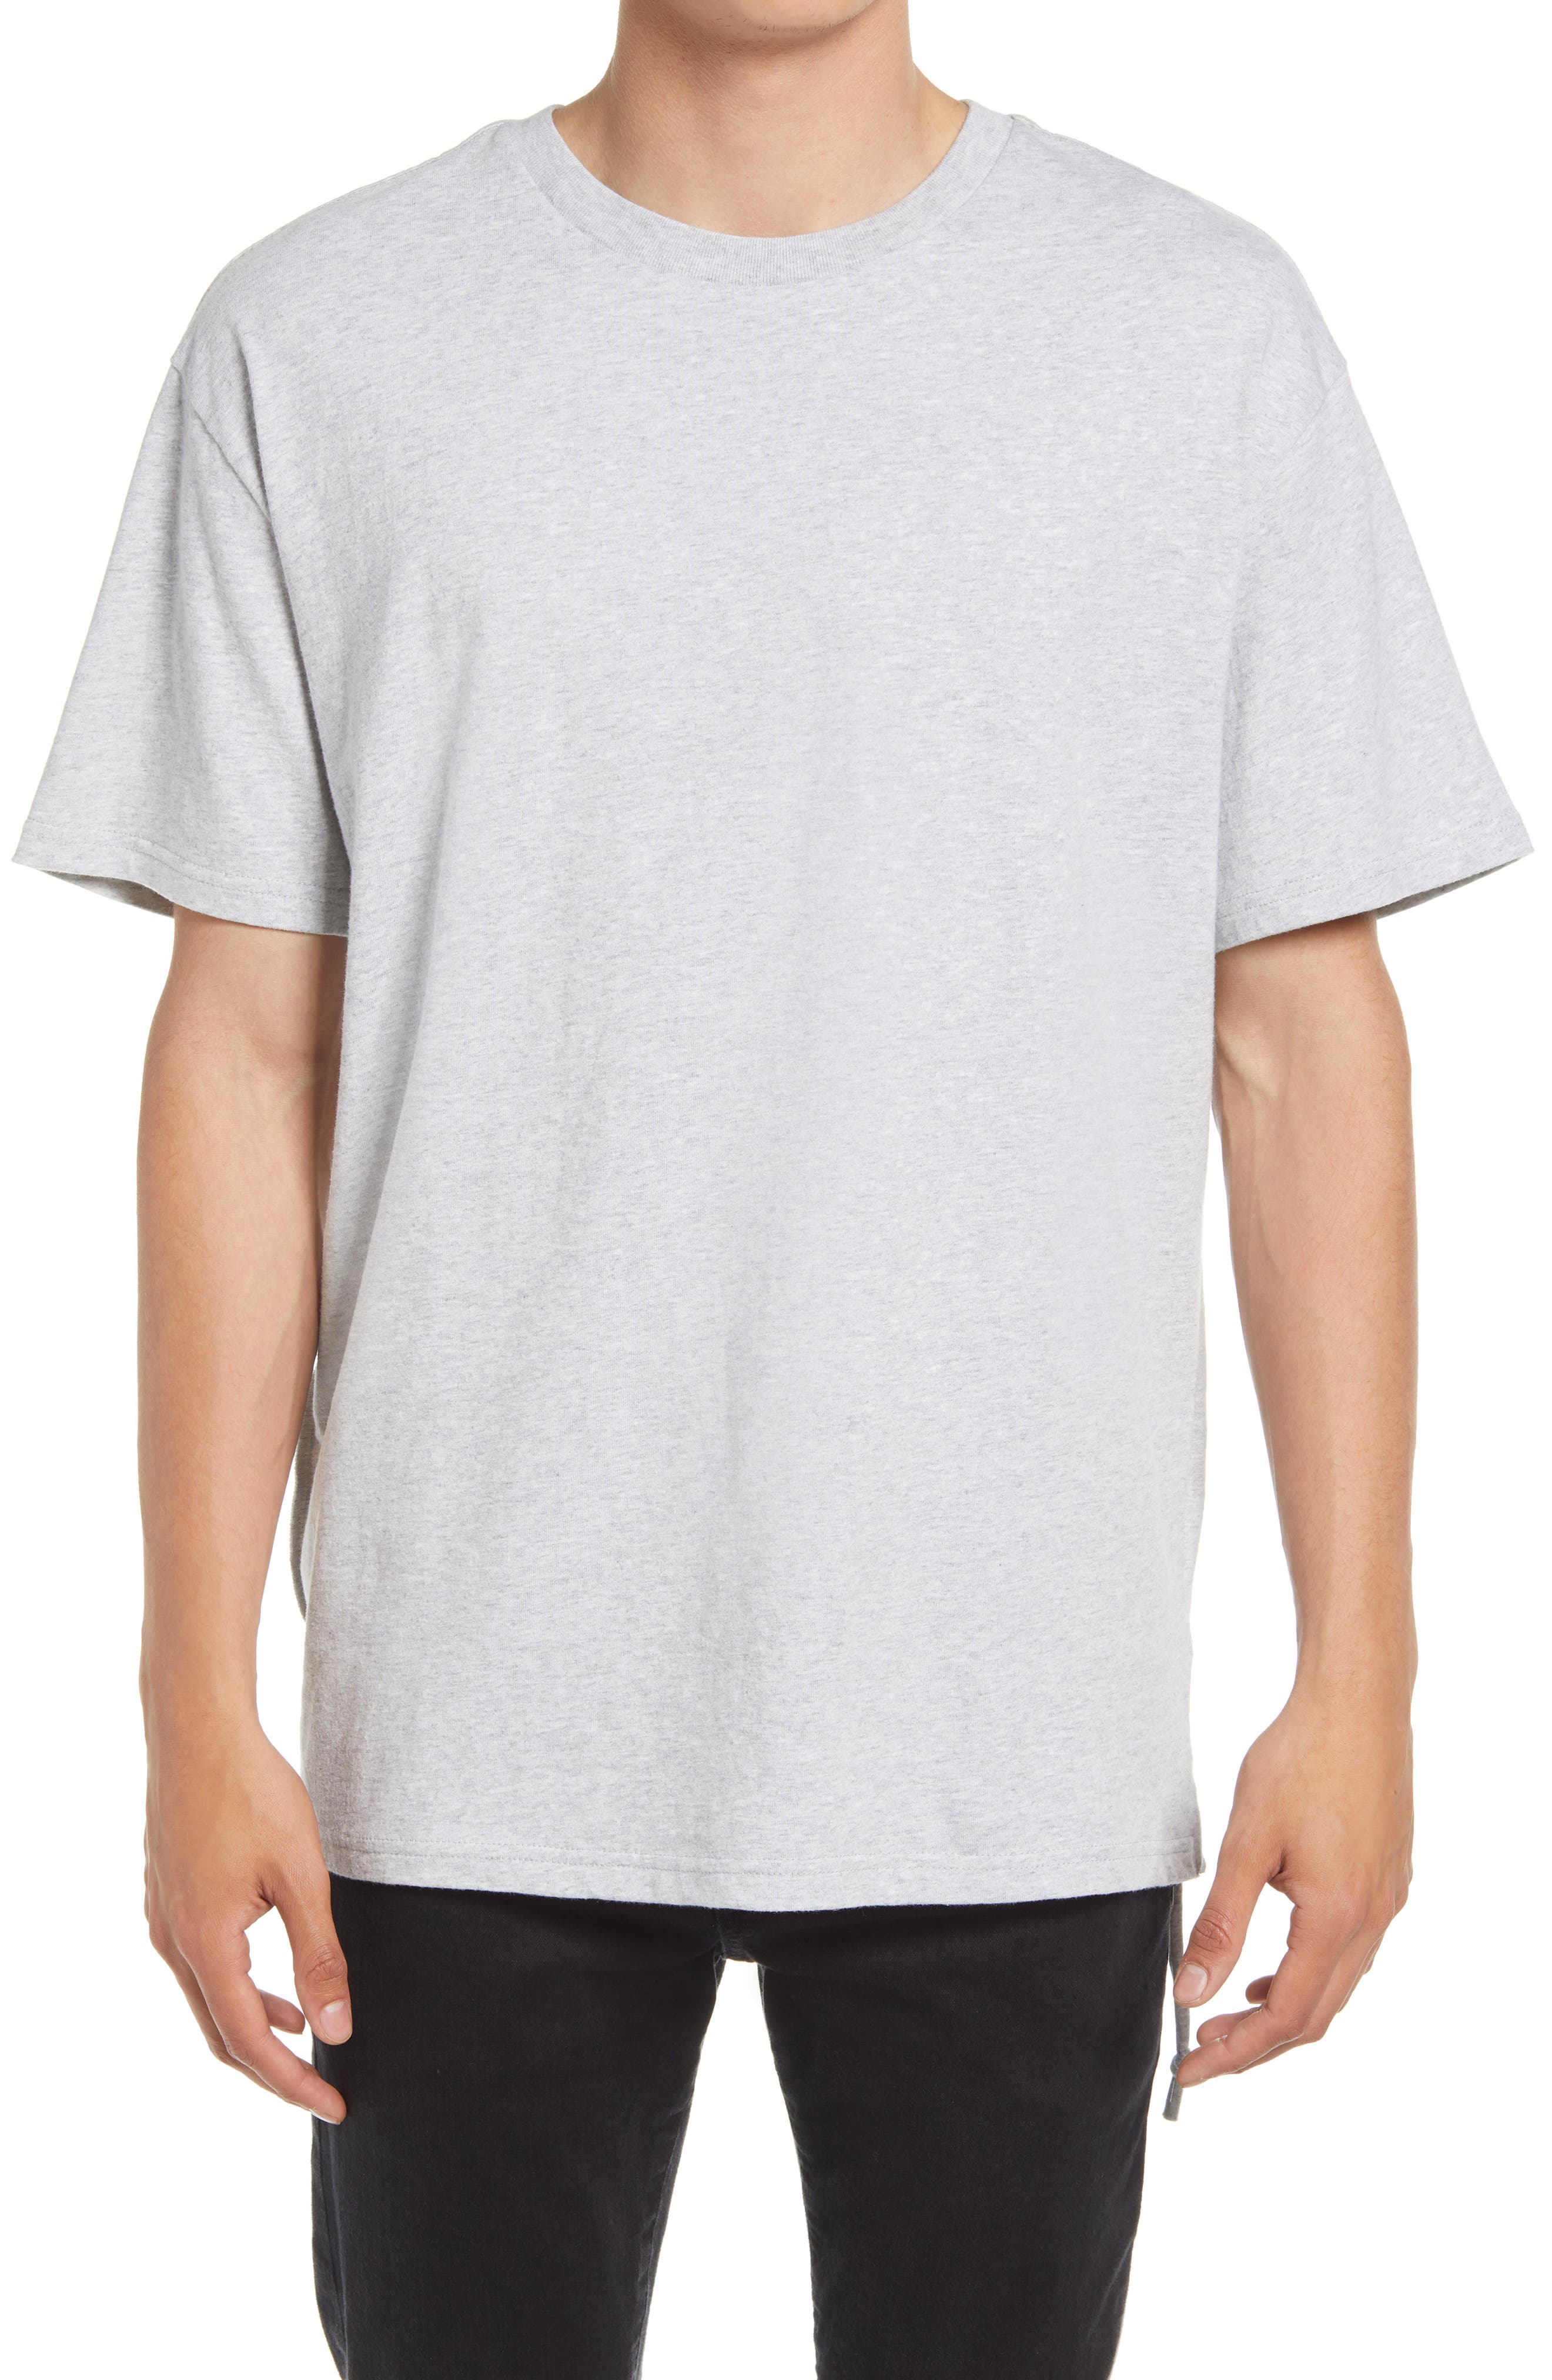 Ksubi Kross Biggie Marled T-Shirt in Light Grey at Nordstrom, Size Small